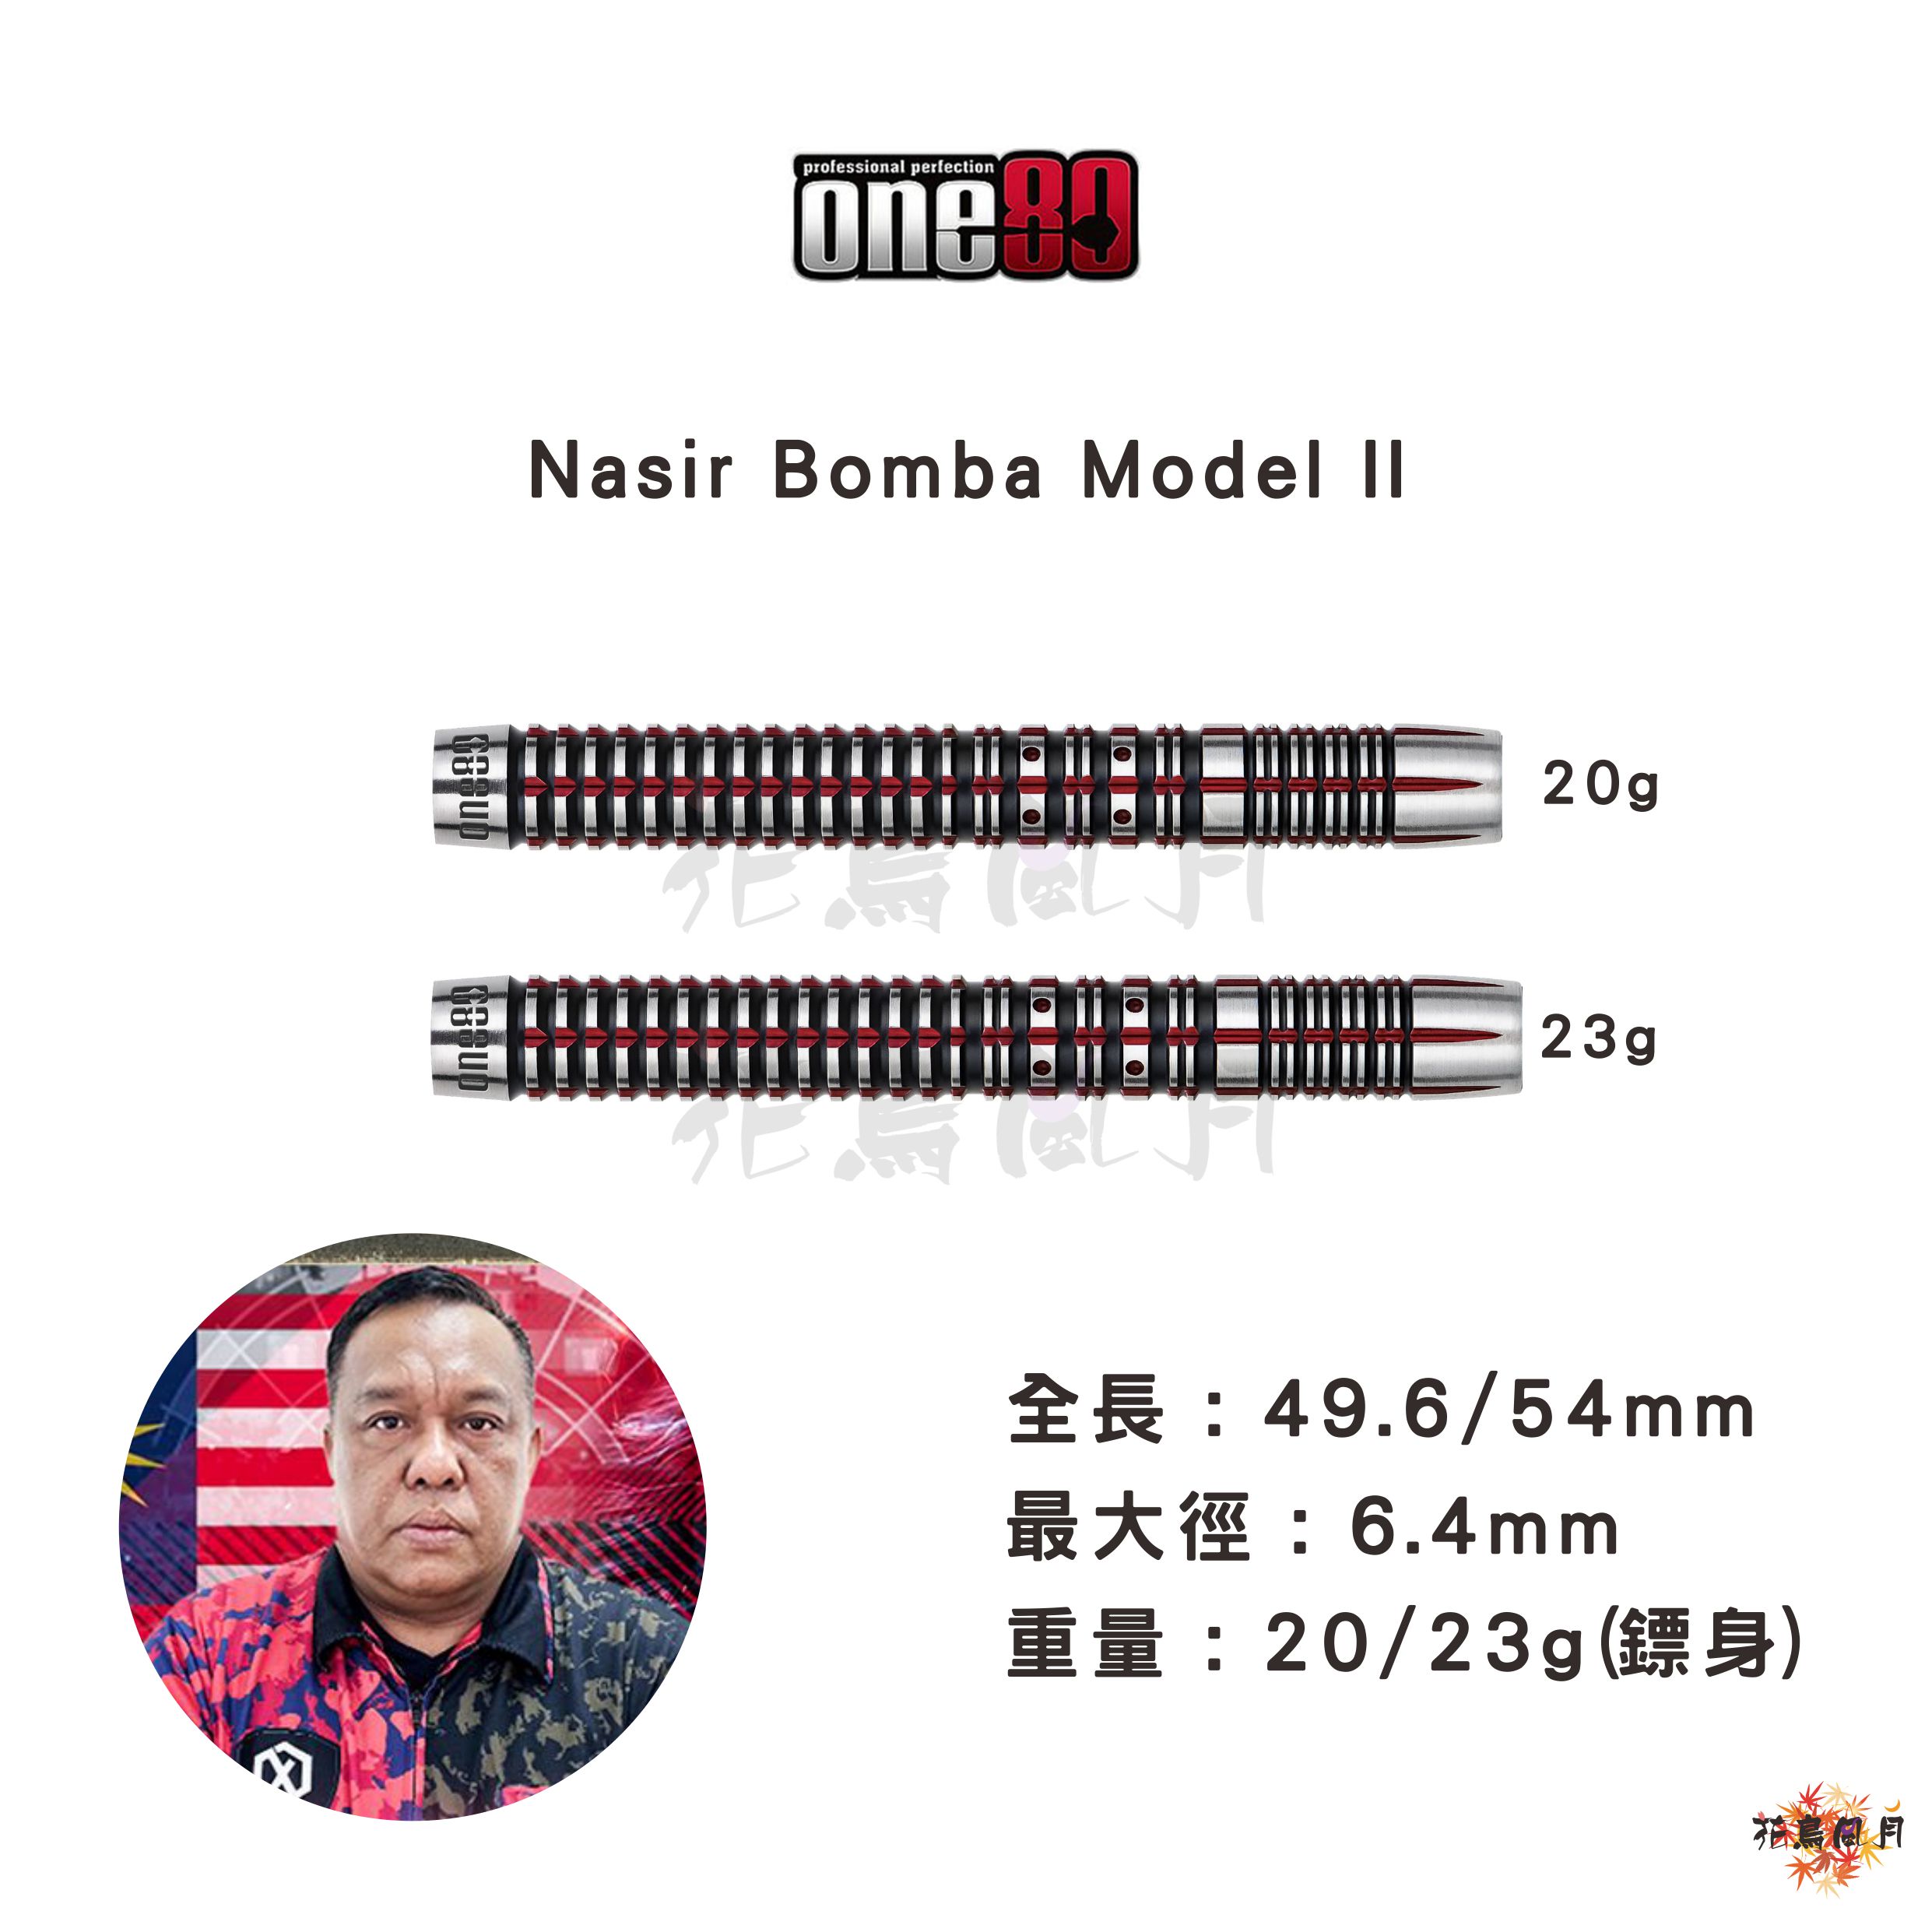 Nasir-Bomba-Model-II.jpg